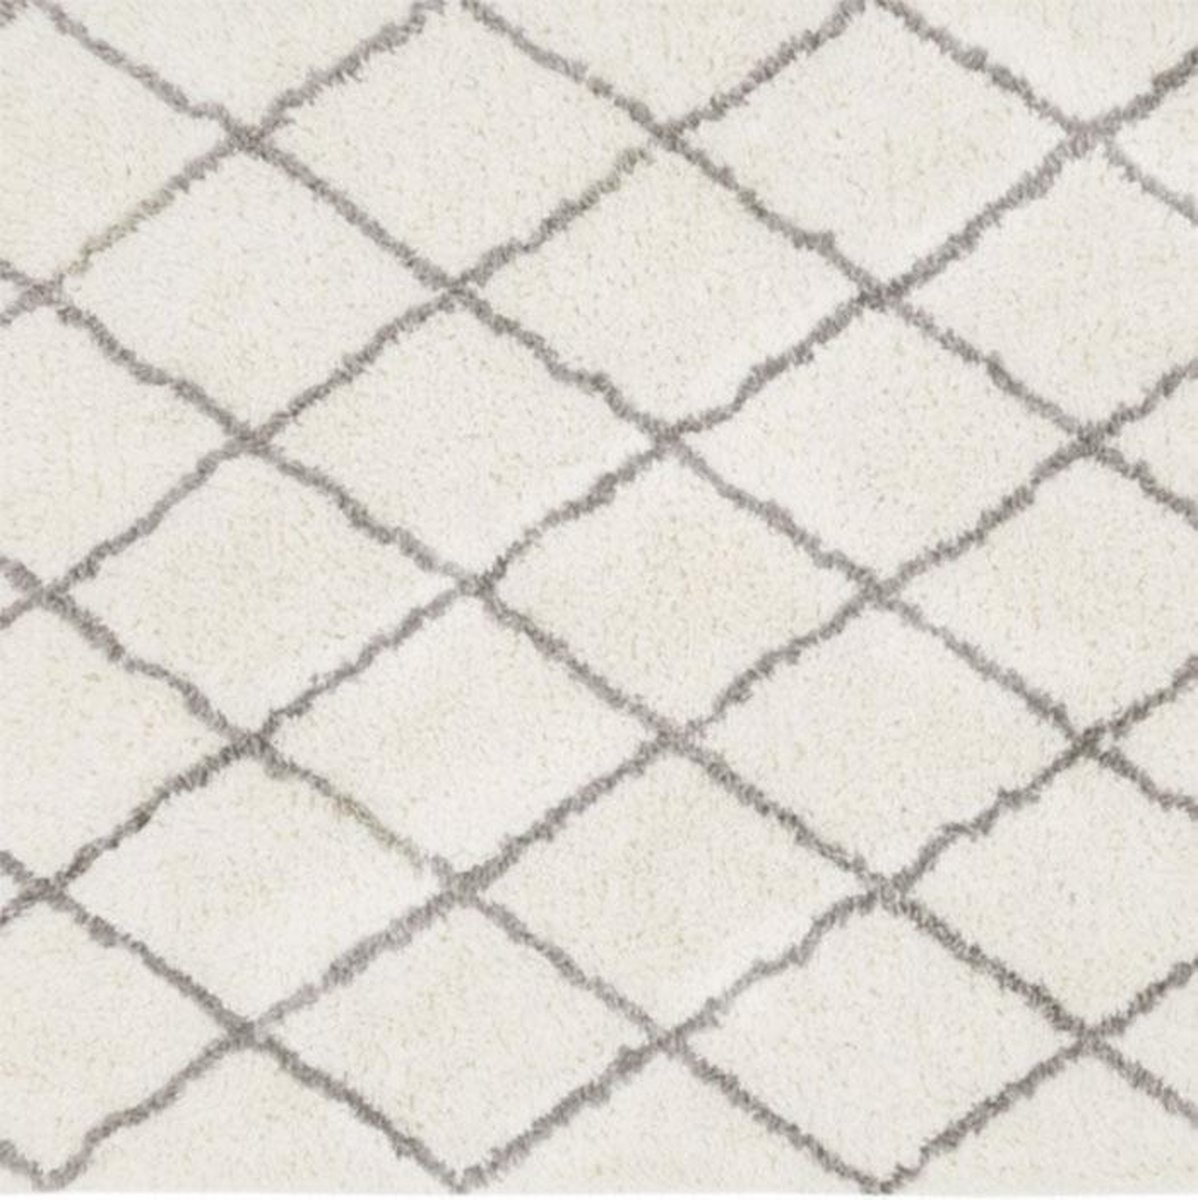 Duplicatie vice versa Geplooid Vloerkleed wol - ruiten - offwhite (wit) / grijs - 200 x 300 - hoogpolig -  rechthoekig | bol.com